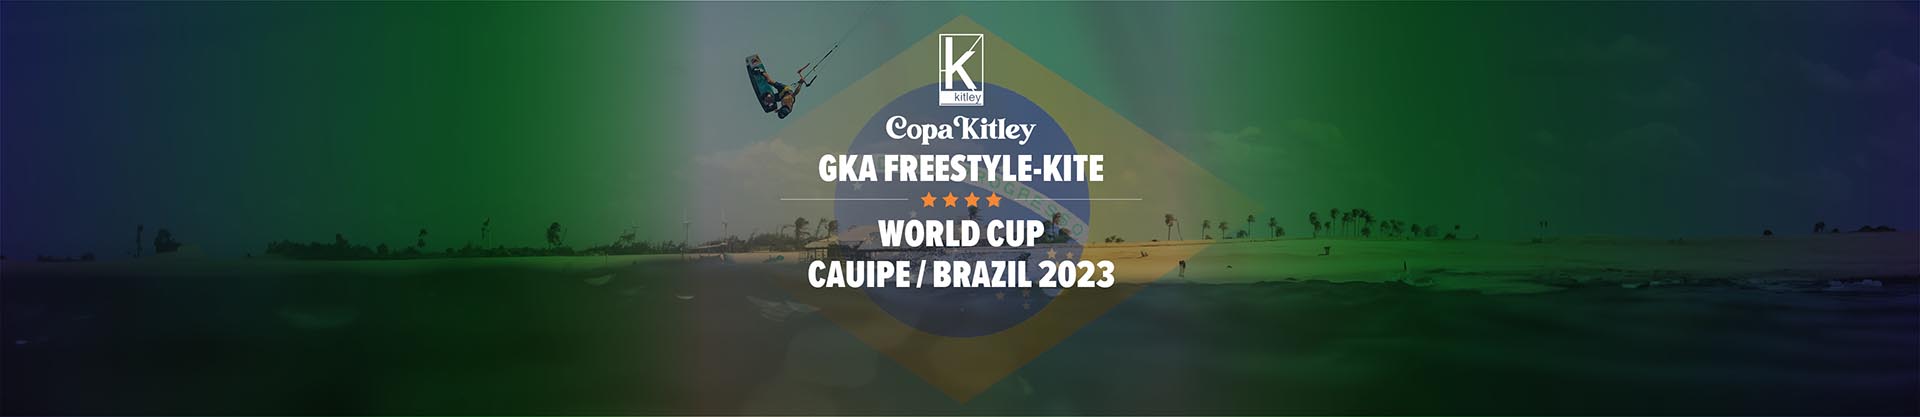 Image for GKA Freestyle-Kite World Cup Brazil 2023